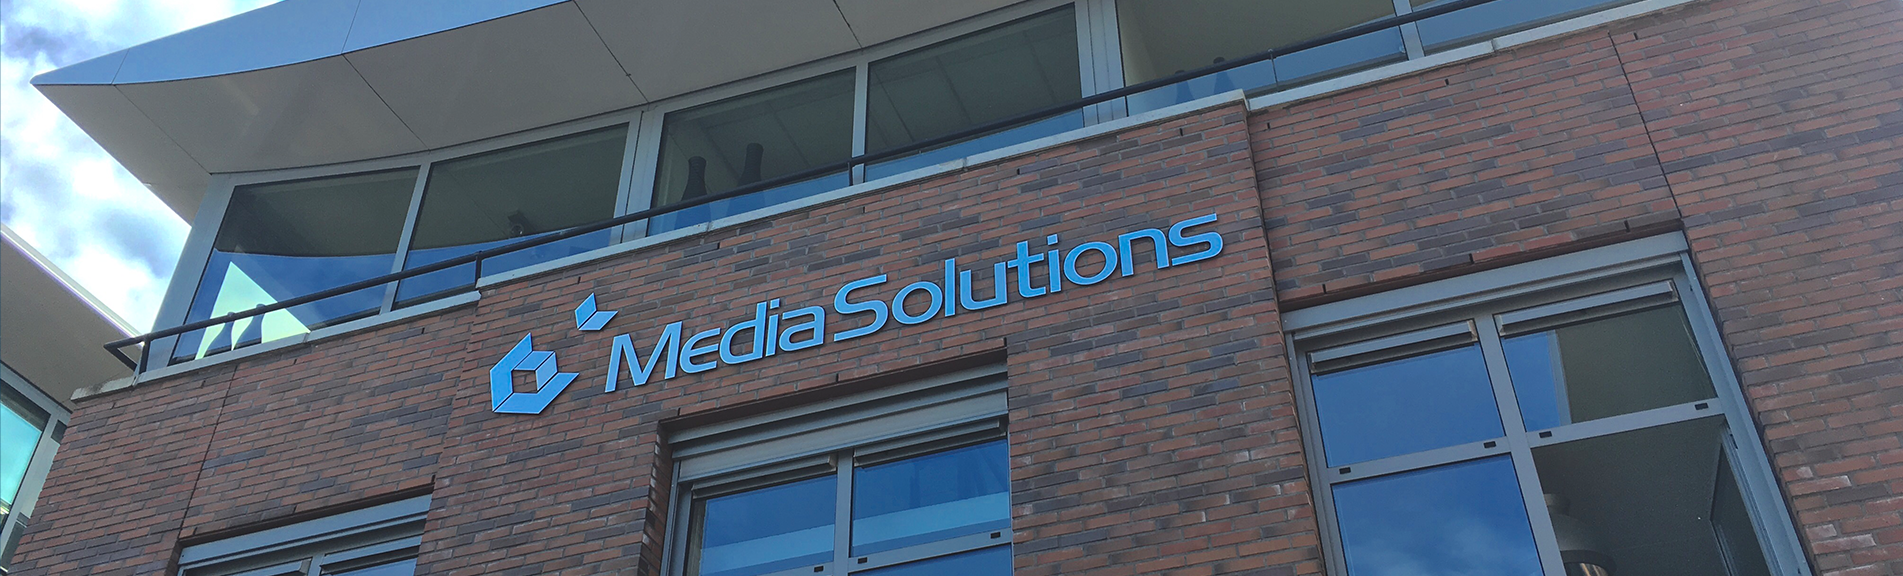 Media Solutions B.V. Landjuweel 56 te Veenendaal